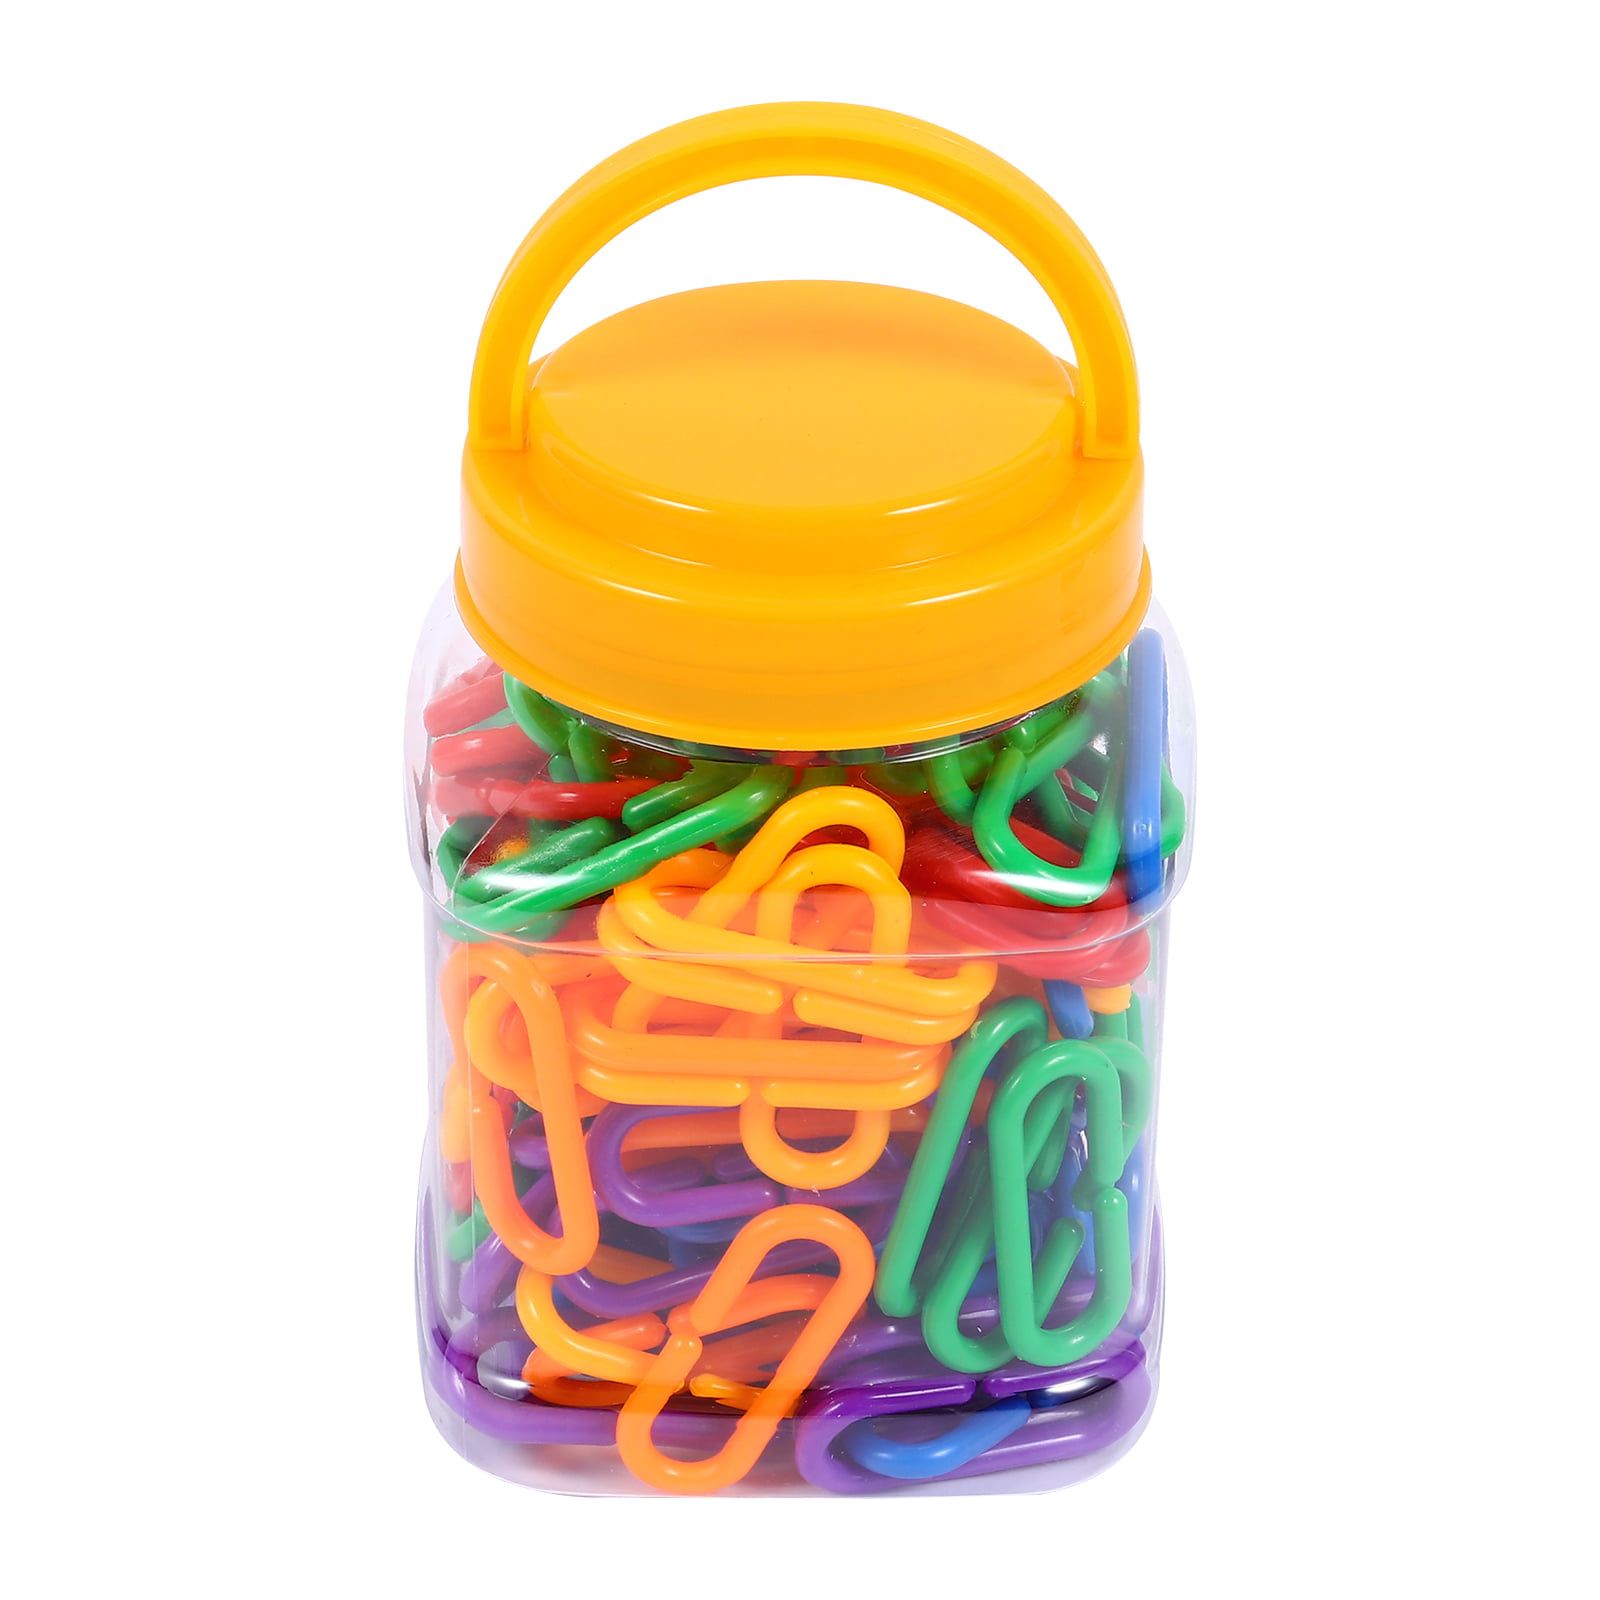 150pcs Plastic C-Clips Hooks Chain Links Rainbow C-Links Children's  Learning Toy 